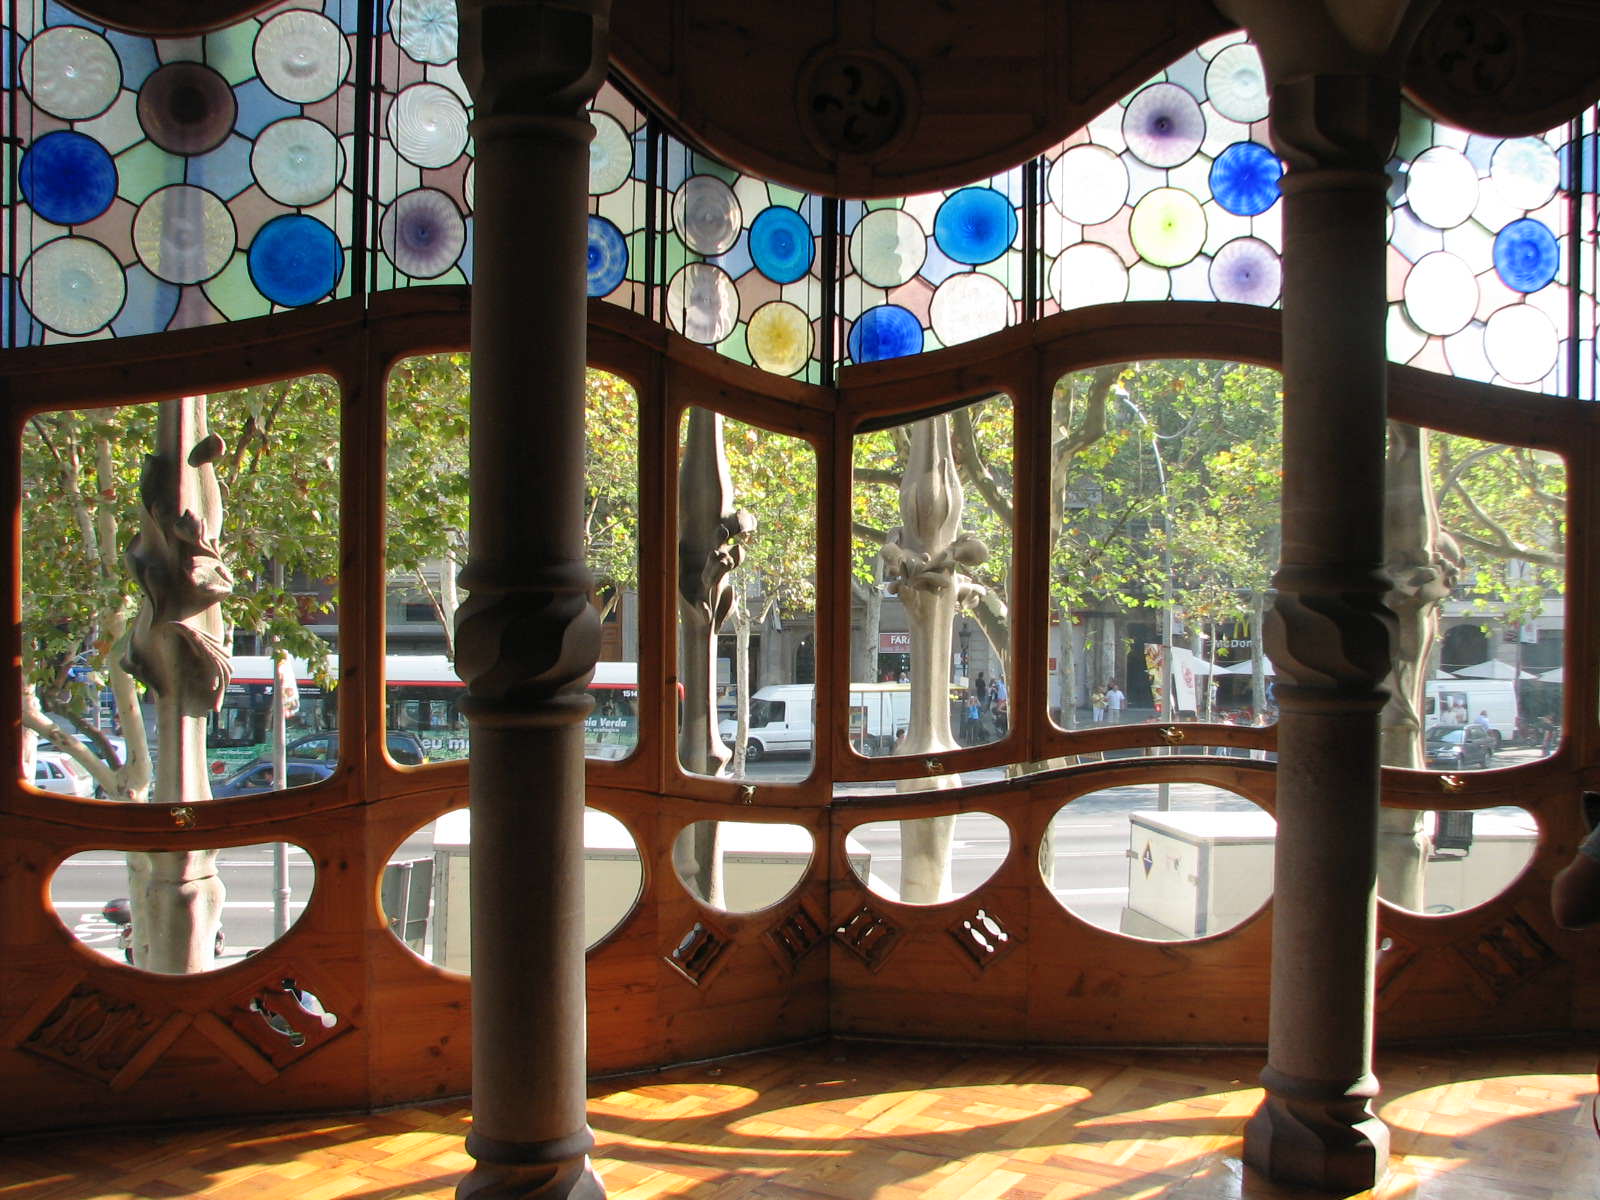 Architecture of Gaudi